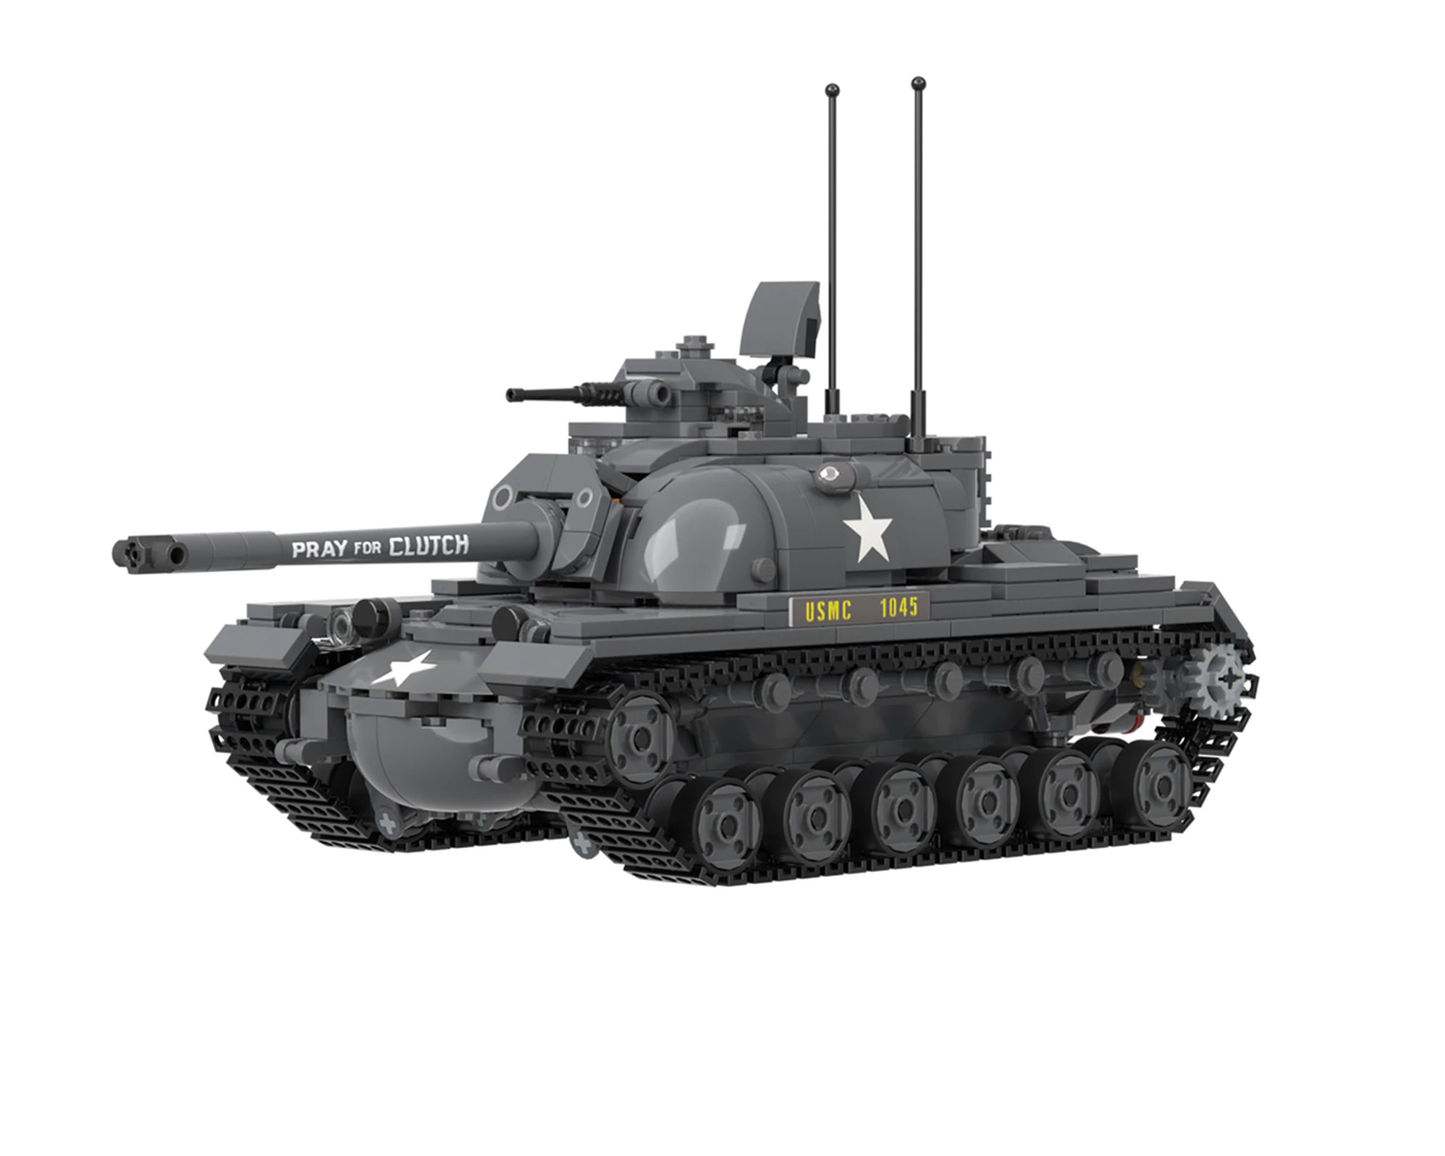 M48A3 Patton - Main Battle Tank - MOMCOM inc.